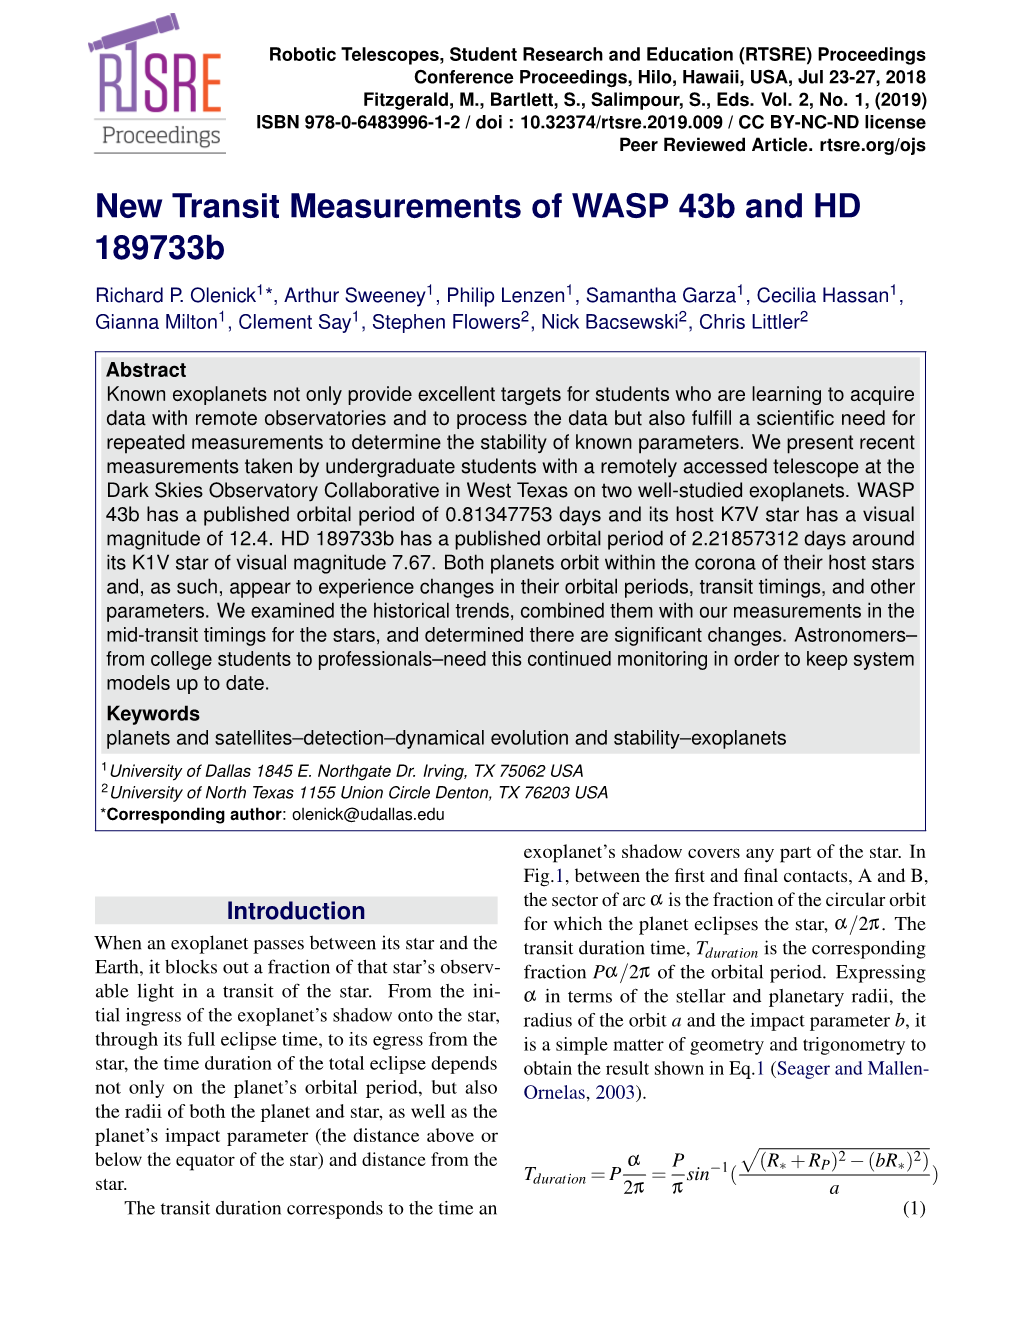 New Transit Measurements of WASP 43B and HD 189733B